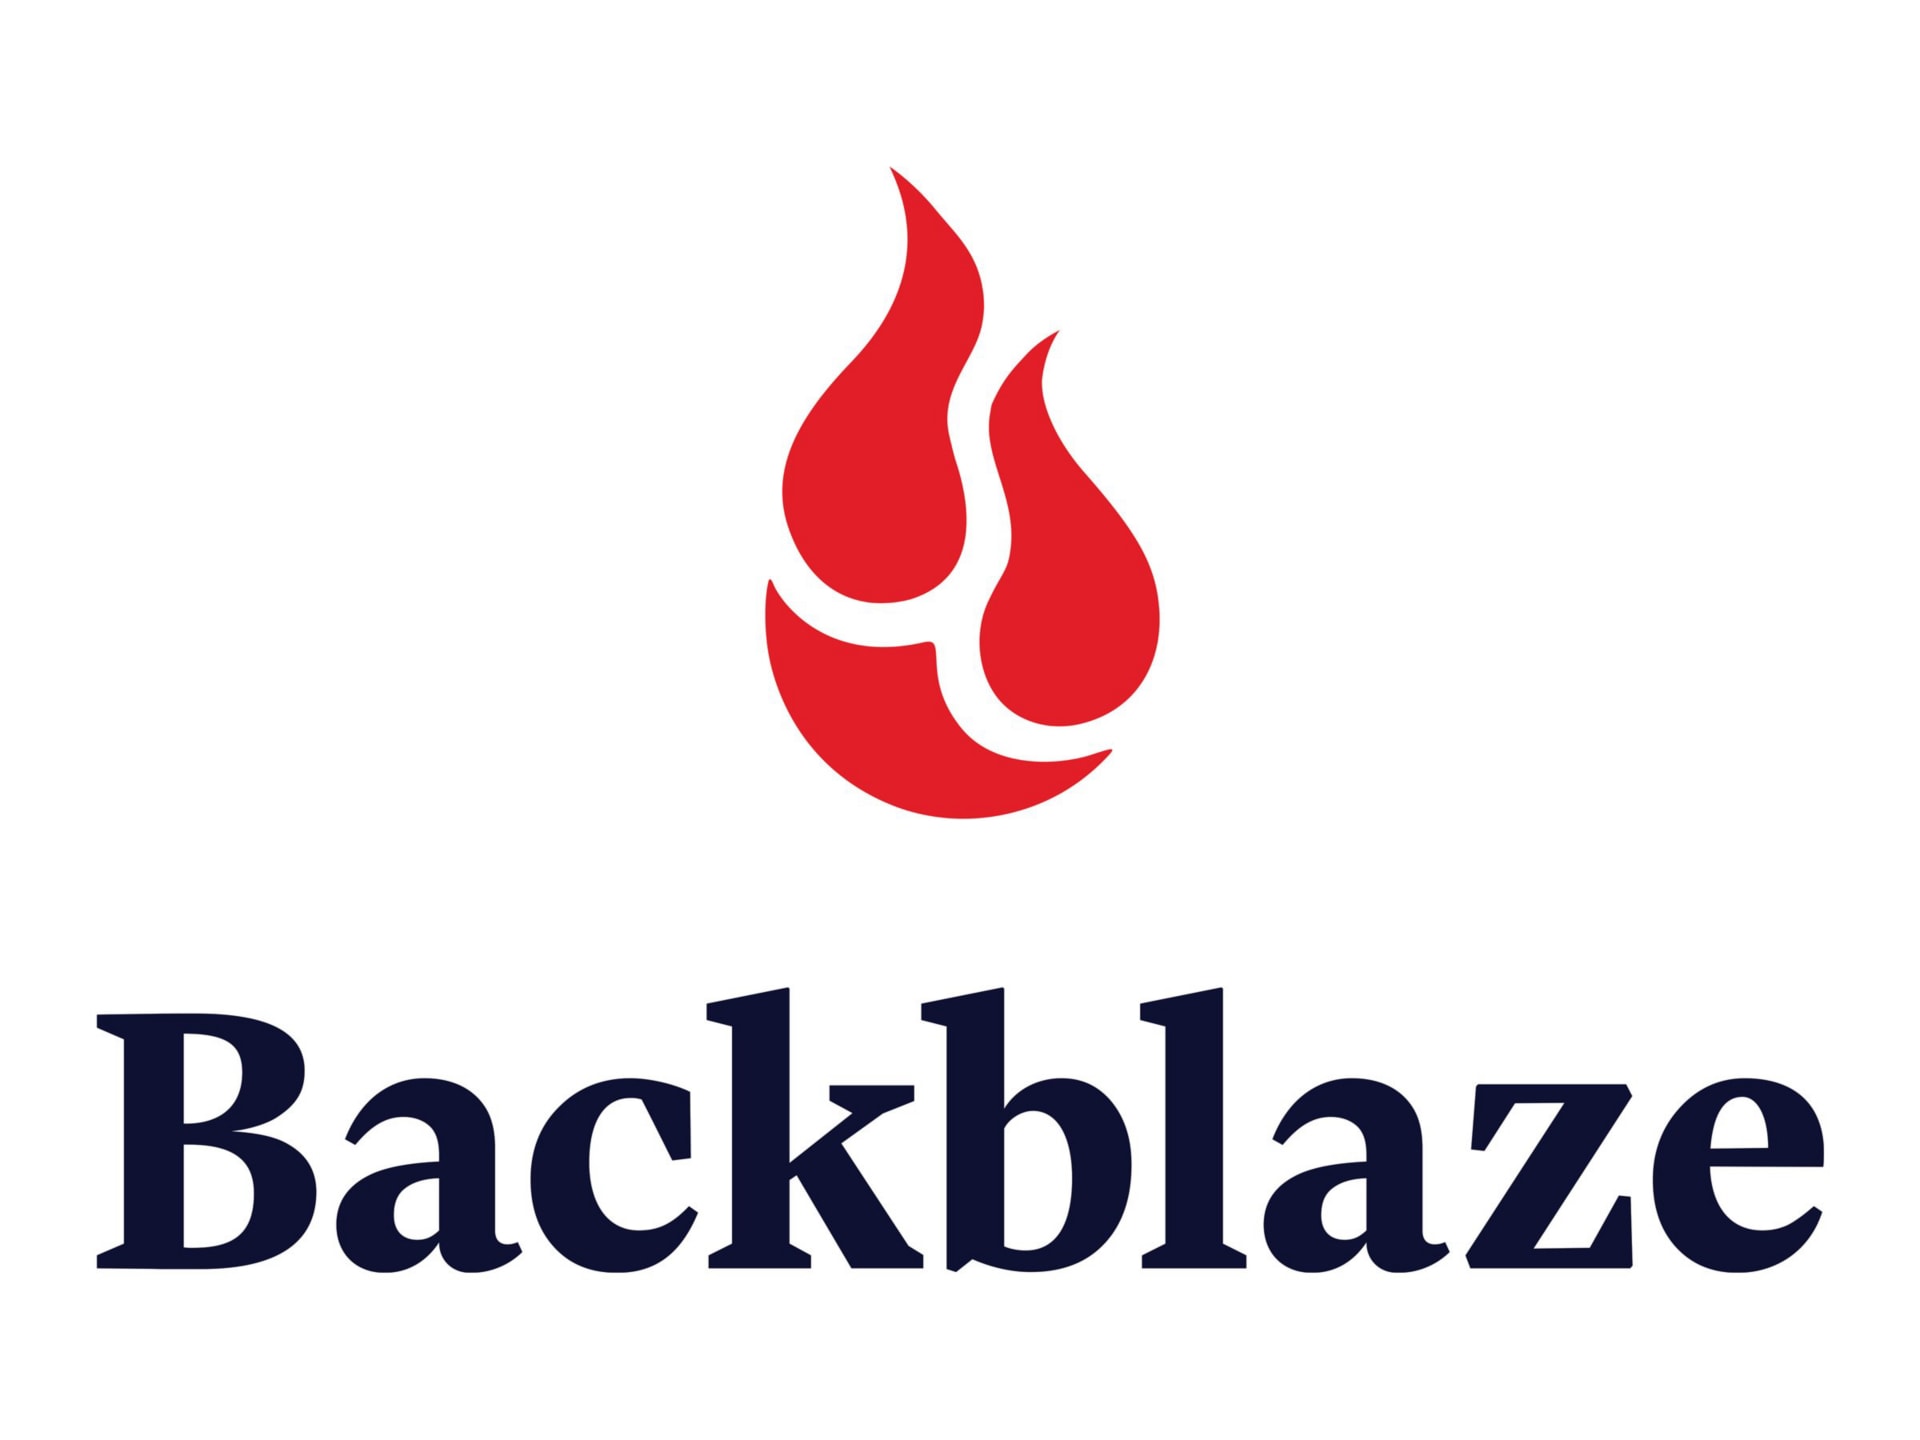 Backblaze B2 Reserve - subscription license (3 years) - 50 TB capacity